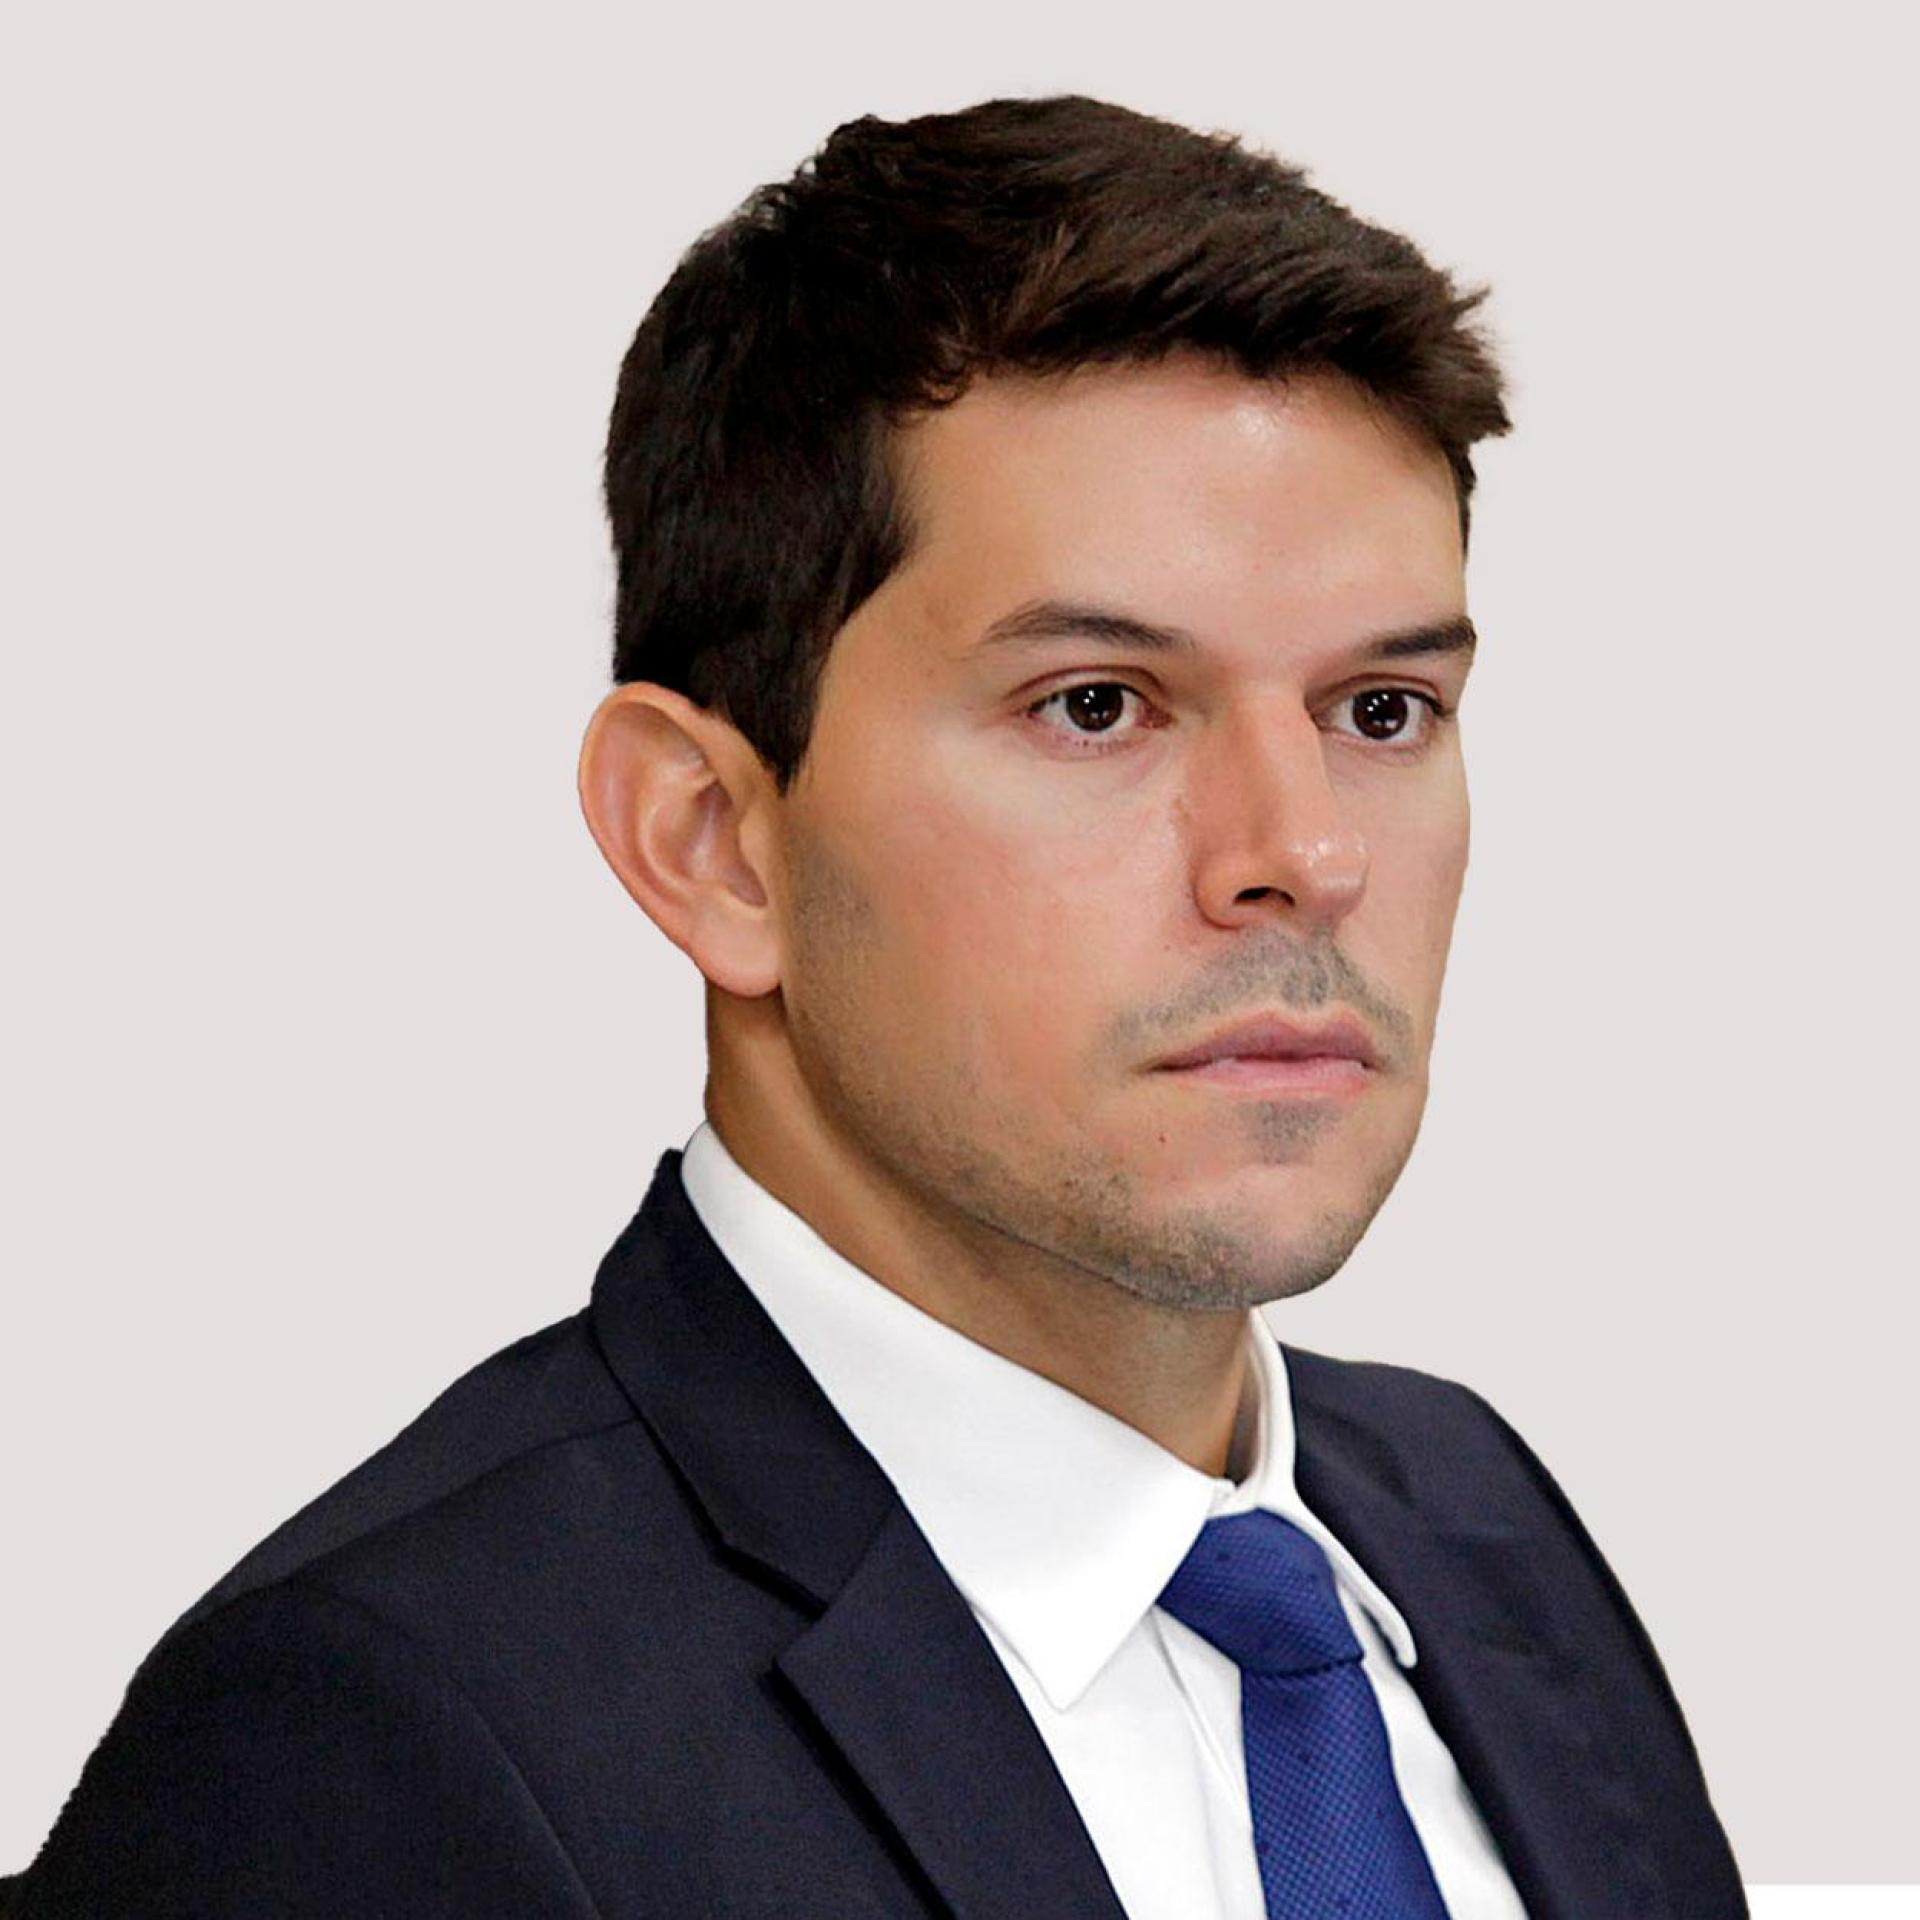 Dr. Alisson Carvalho